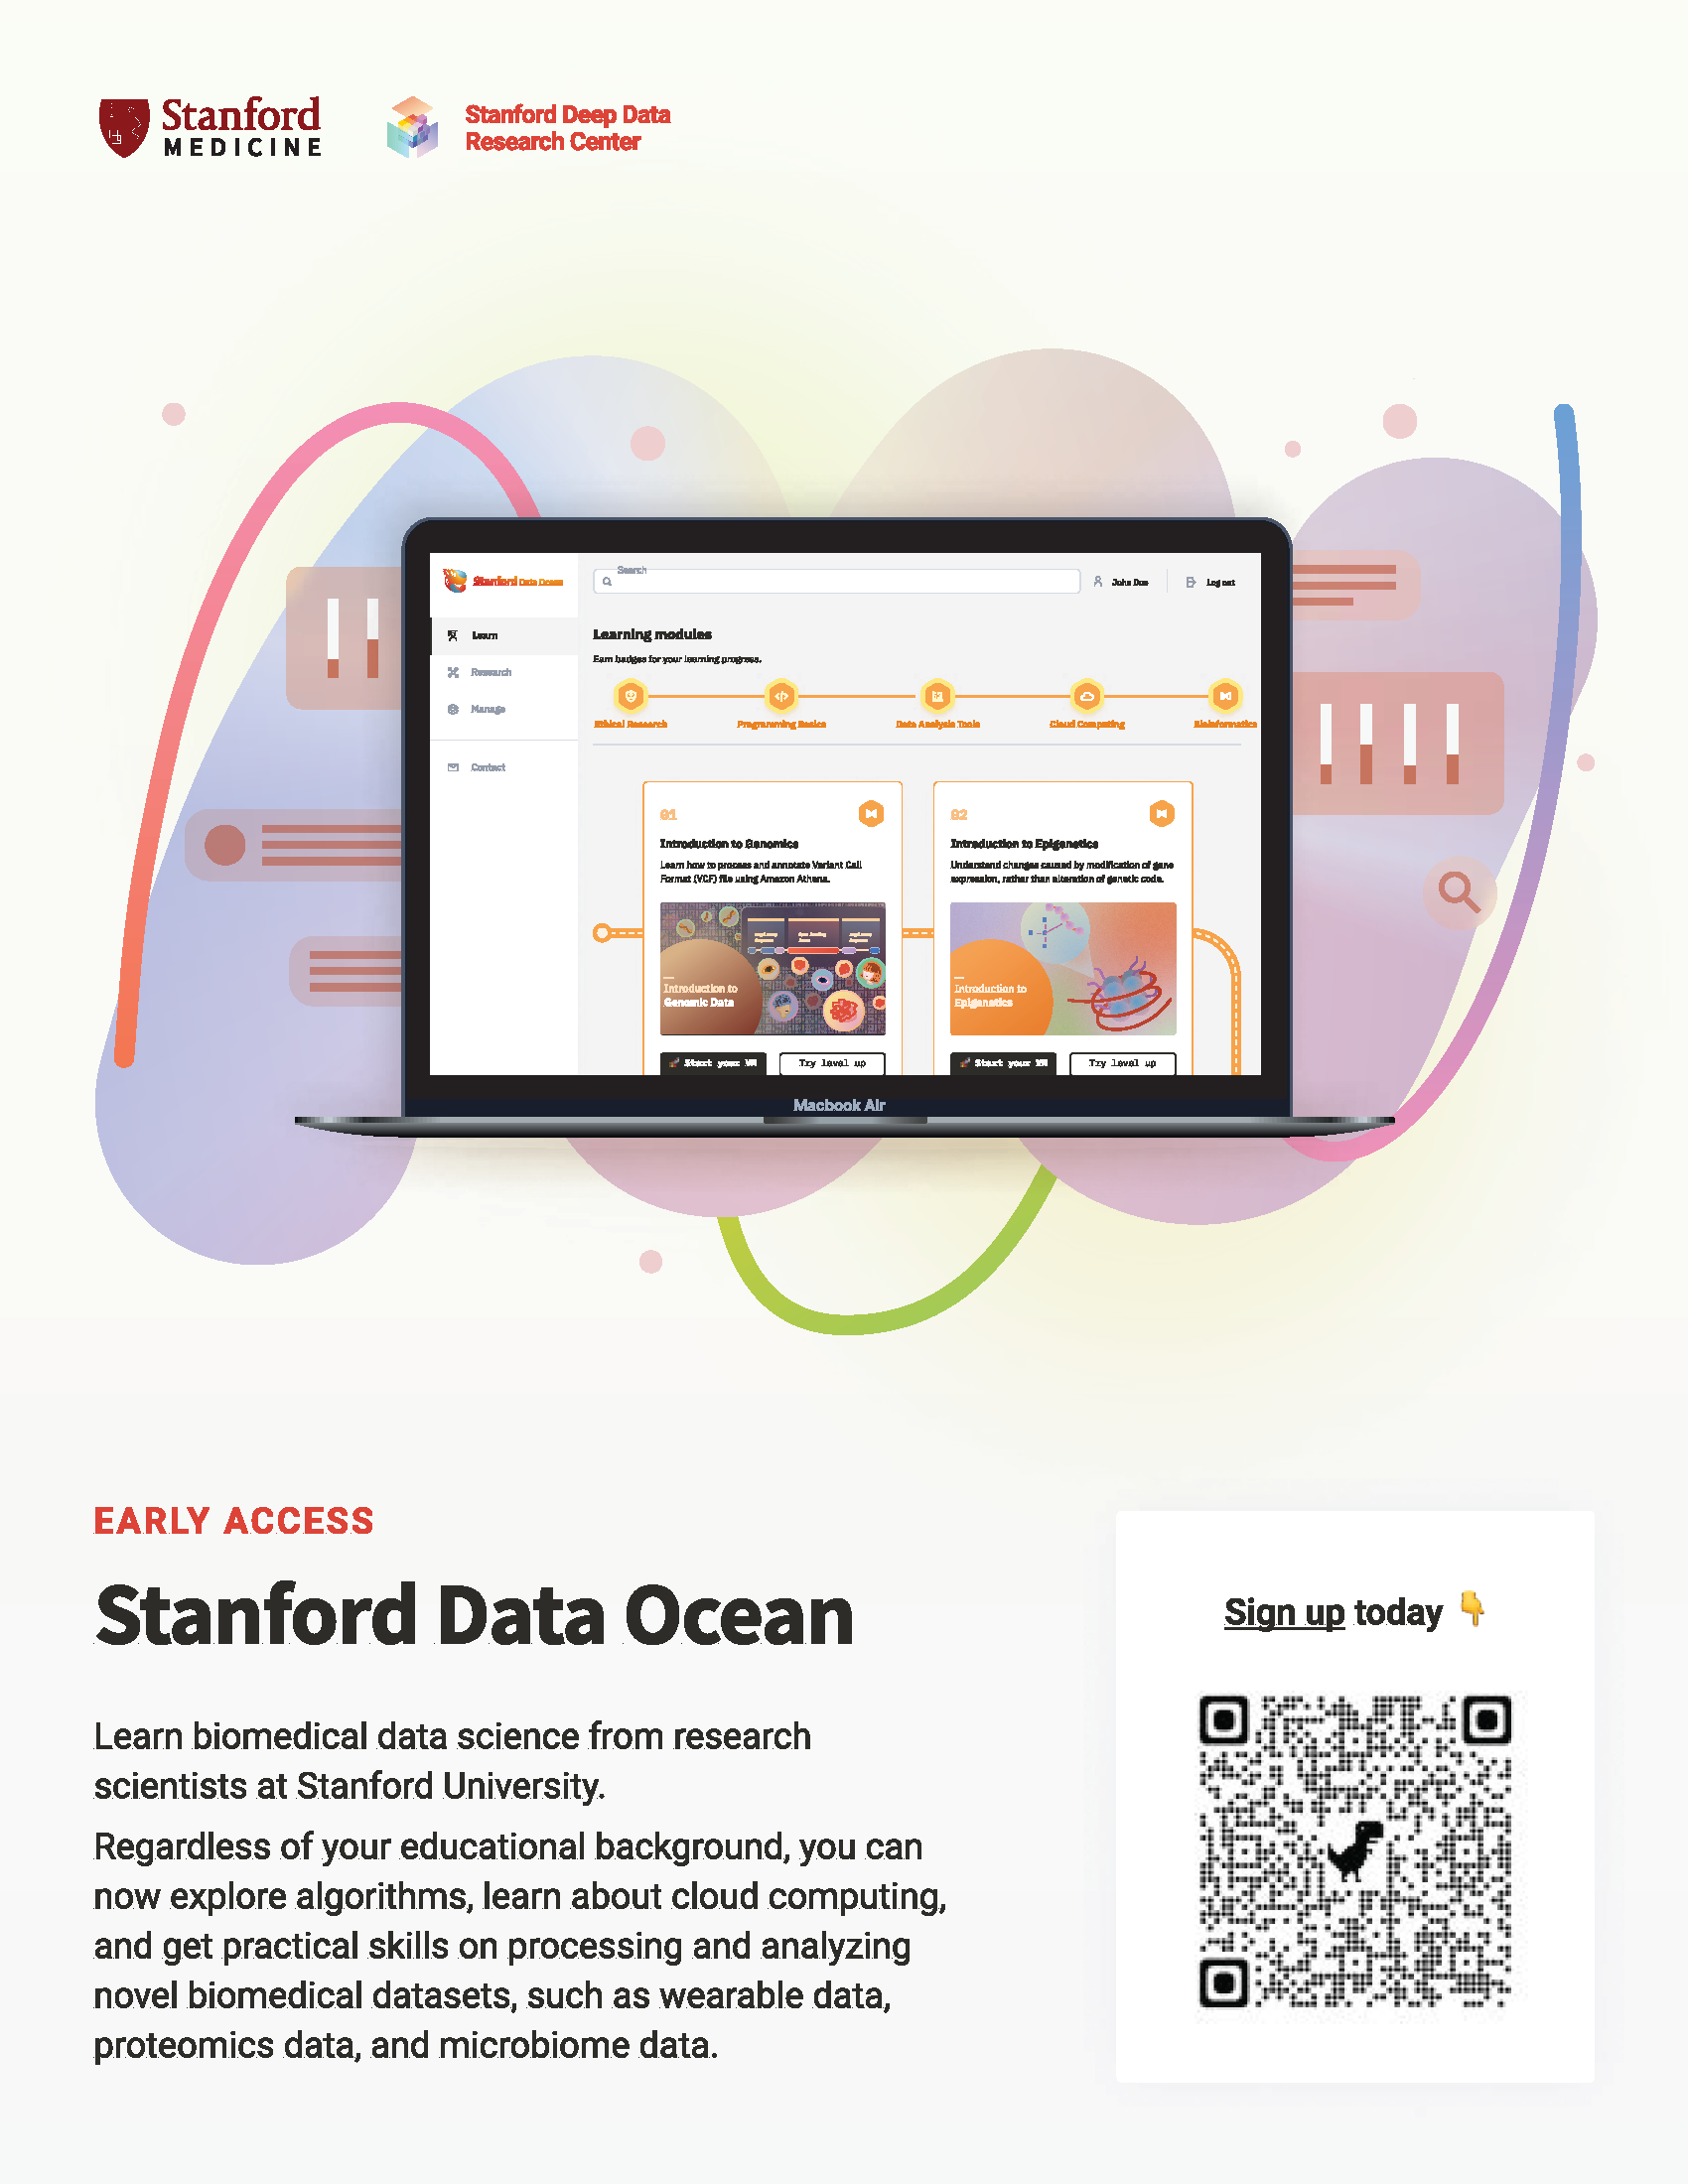 Stanford Data Ocean